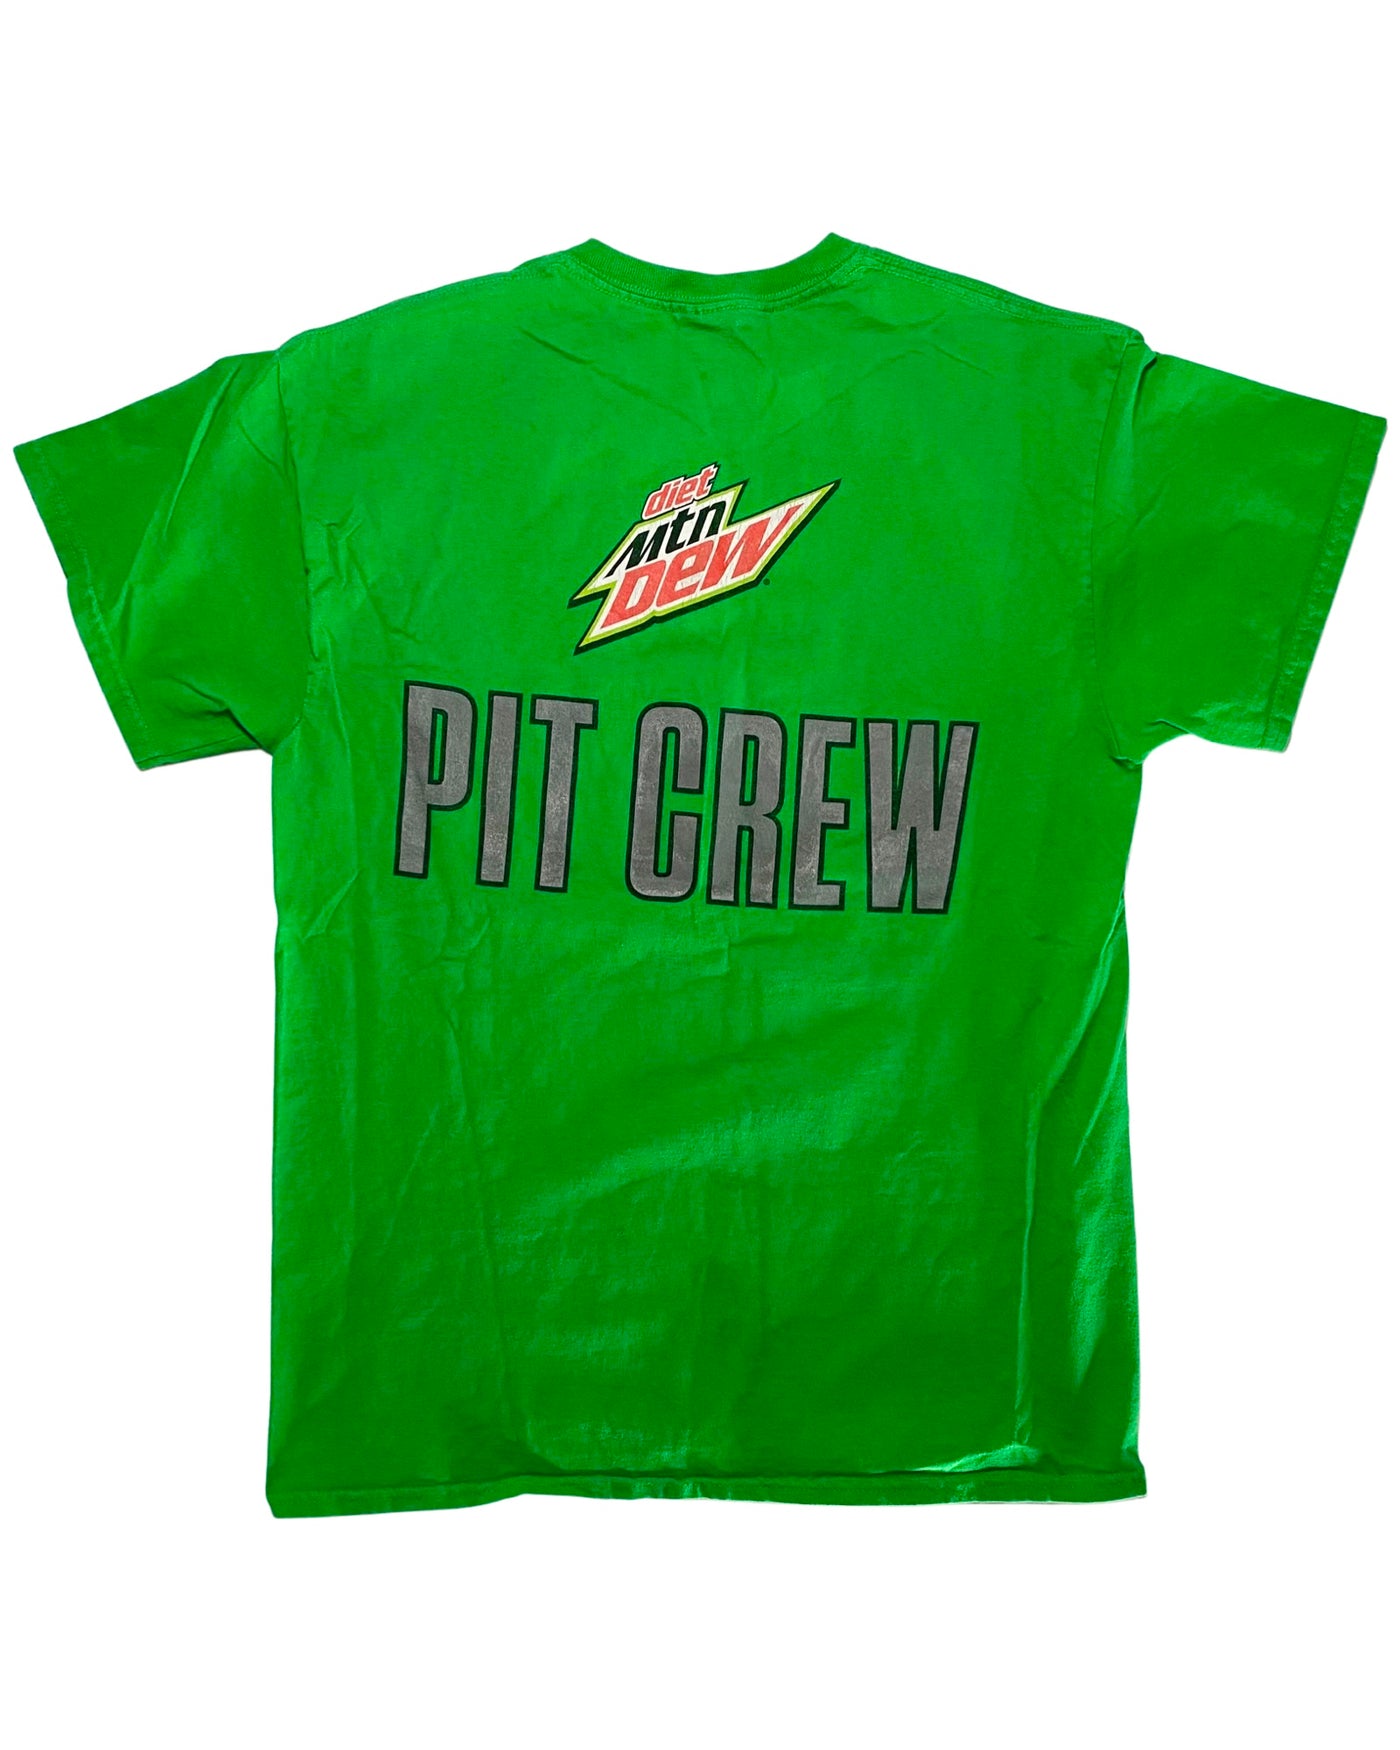 Y2K Mtn Dew Pit Crew T-Shirt